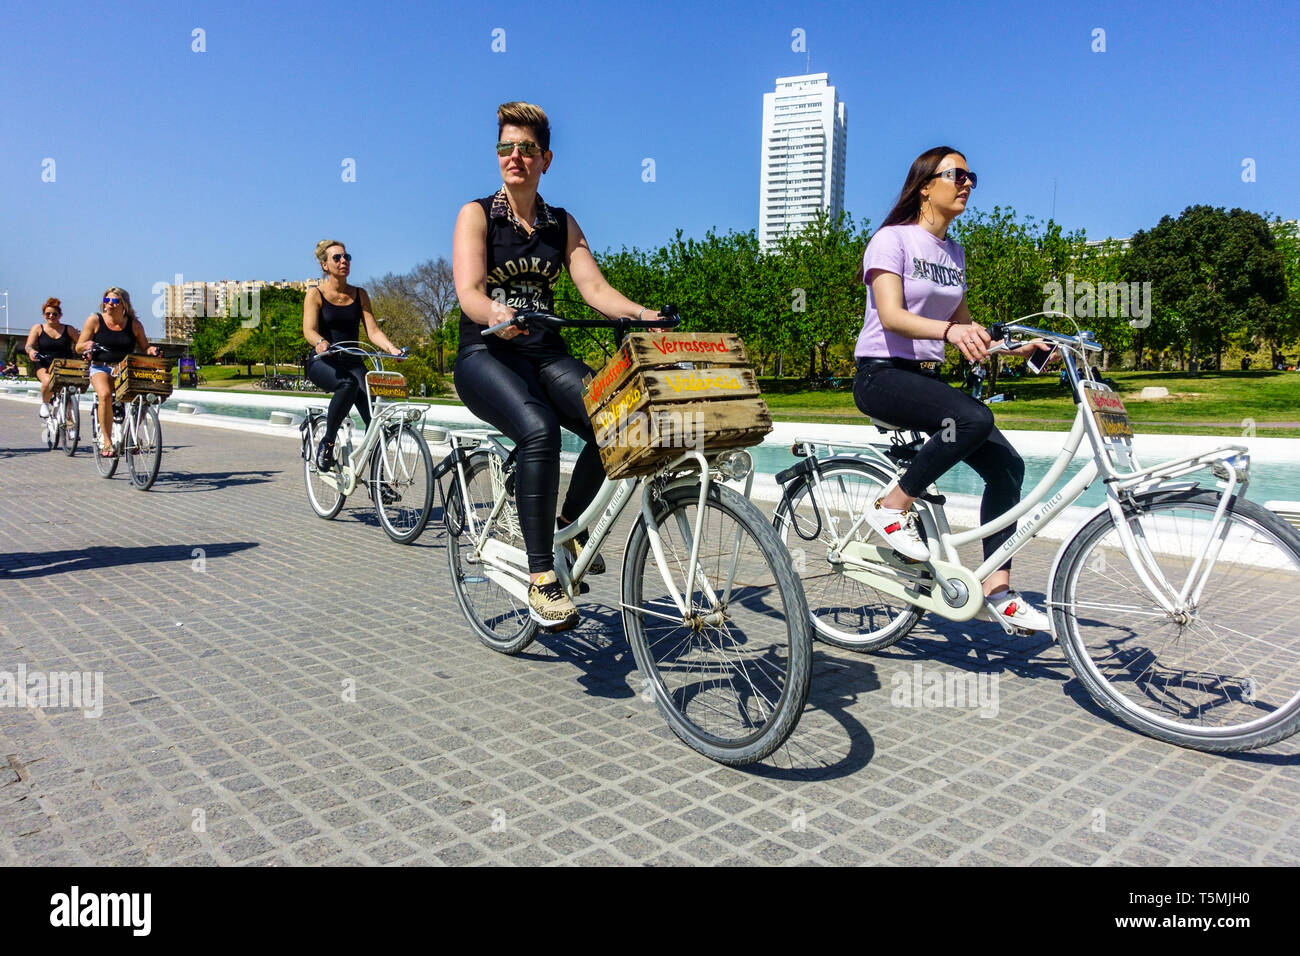 Tourists riding a bike on a rental bike, women cycling on a bicycle path in Valencia Turia Park Spain bicycle city Europe bike lane Stock Photo